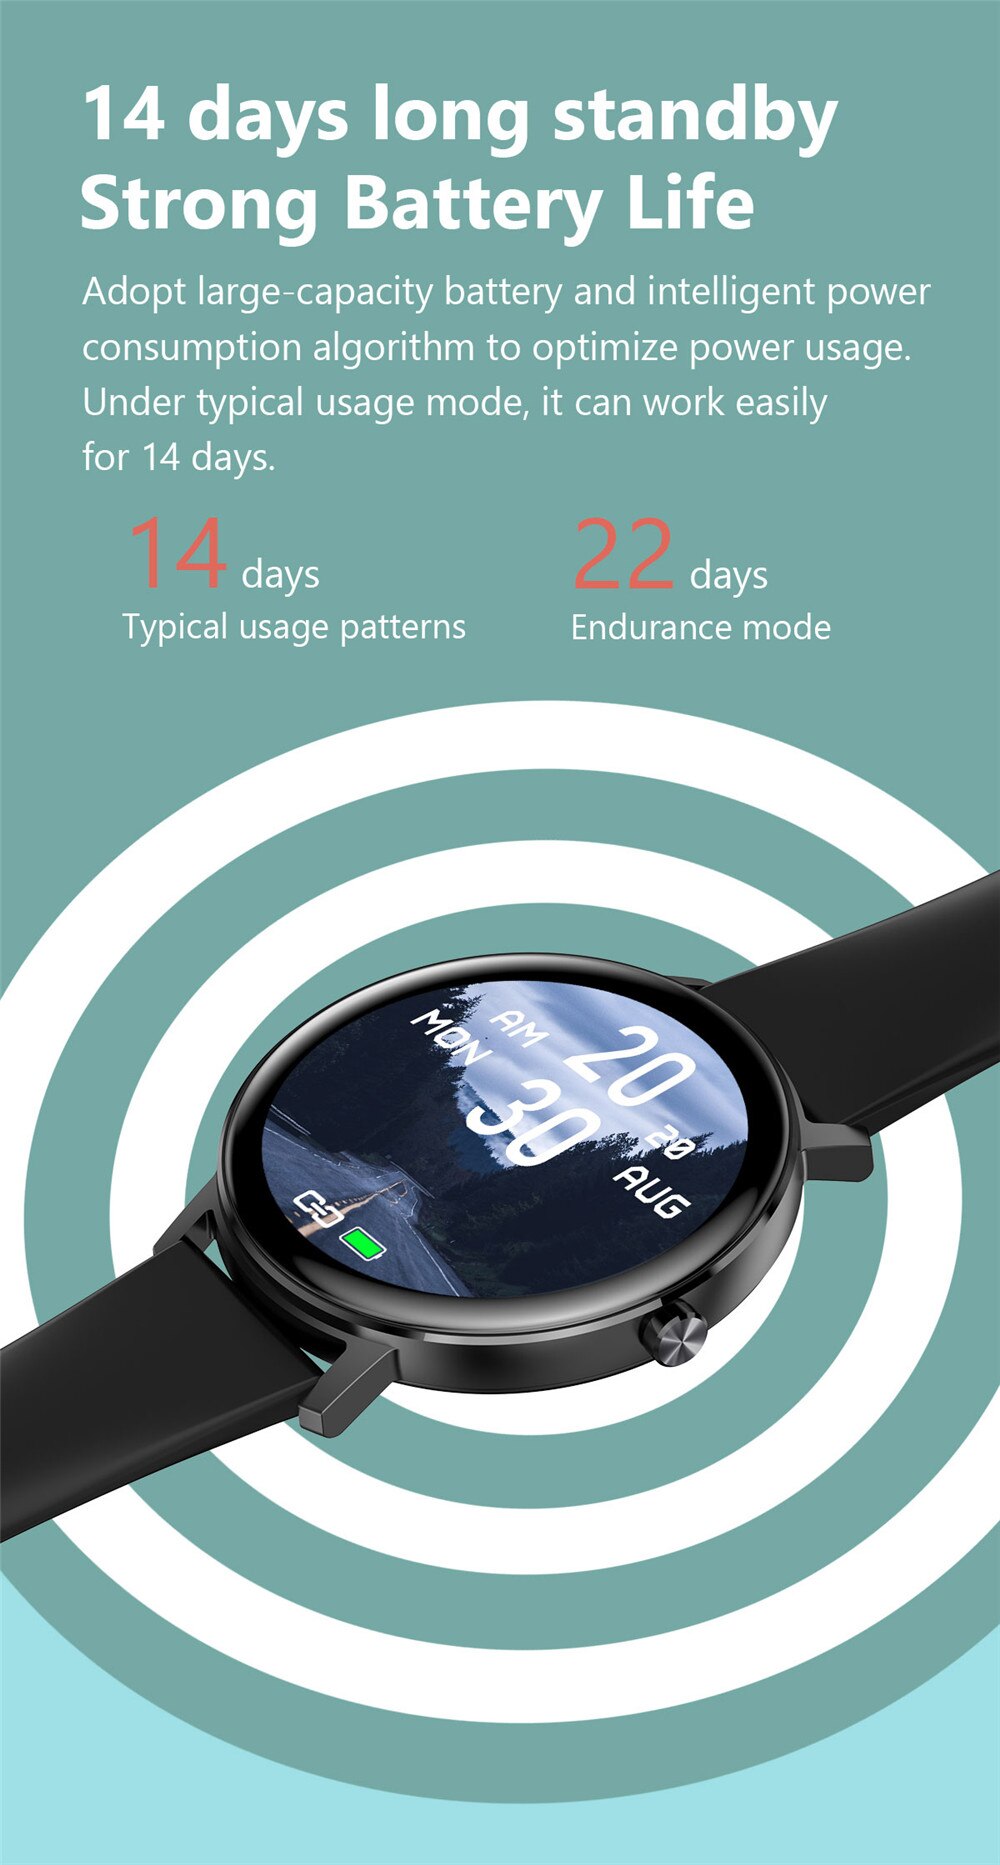 R18 Full Tourch Smart Watch Men Women Heart Rate Fitness Tracker Music Control Smartwatch Blood Pressure Monitor Smart Watches